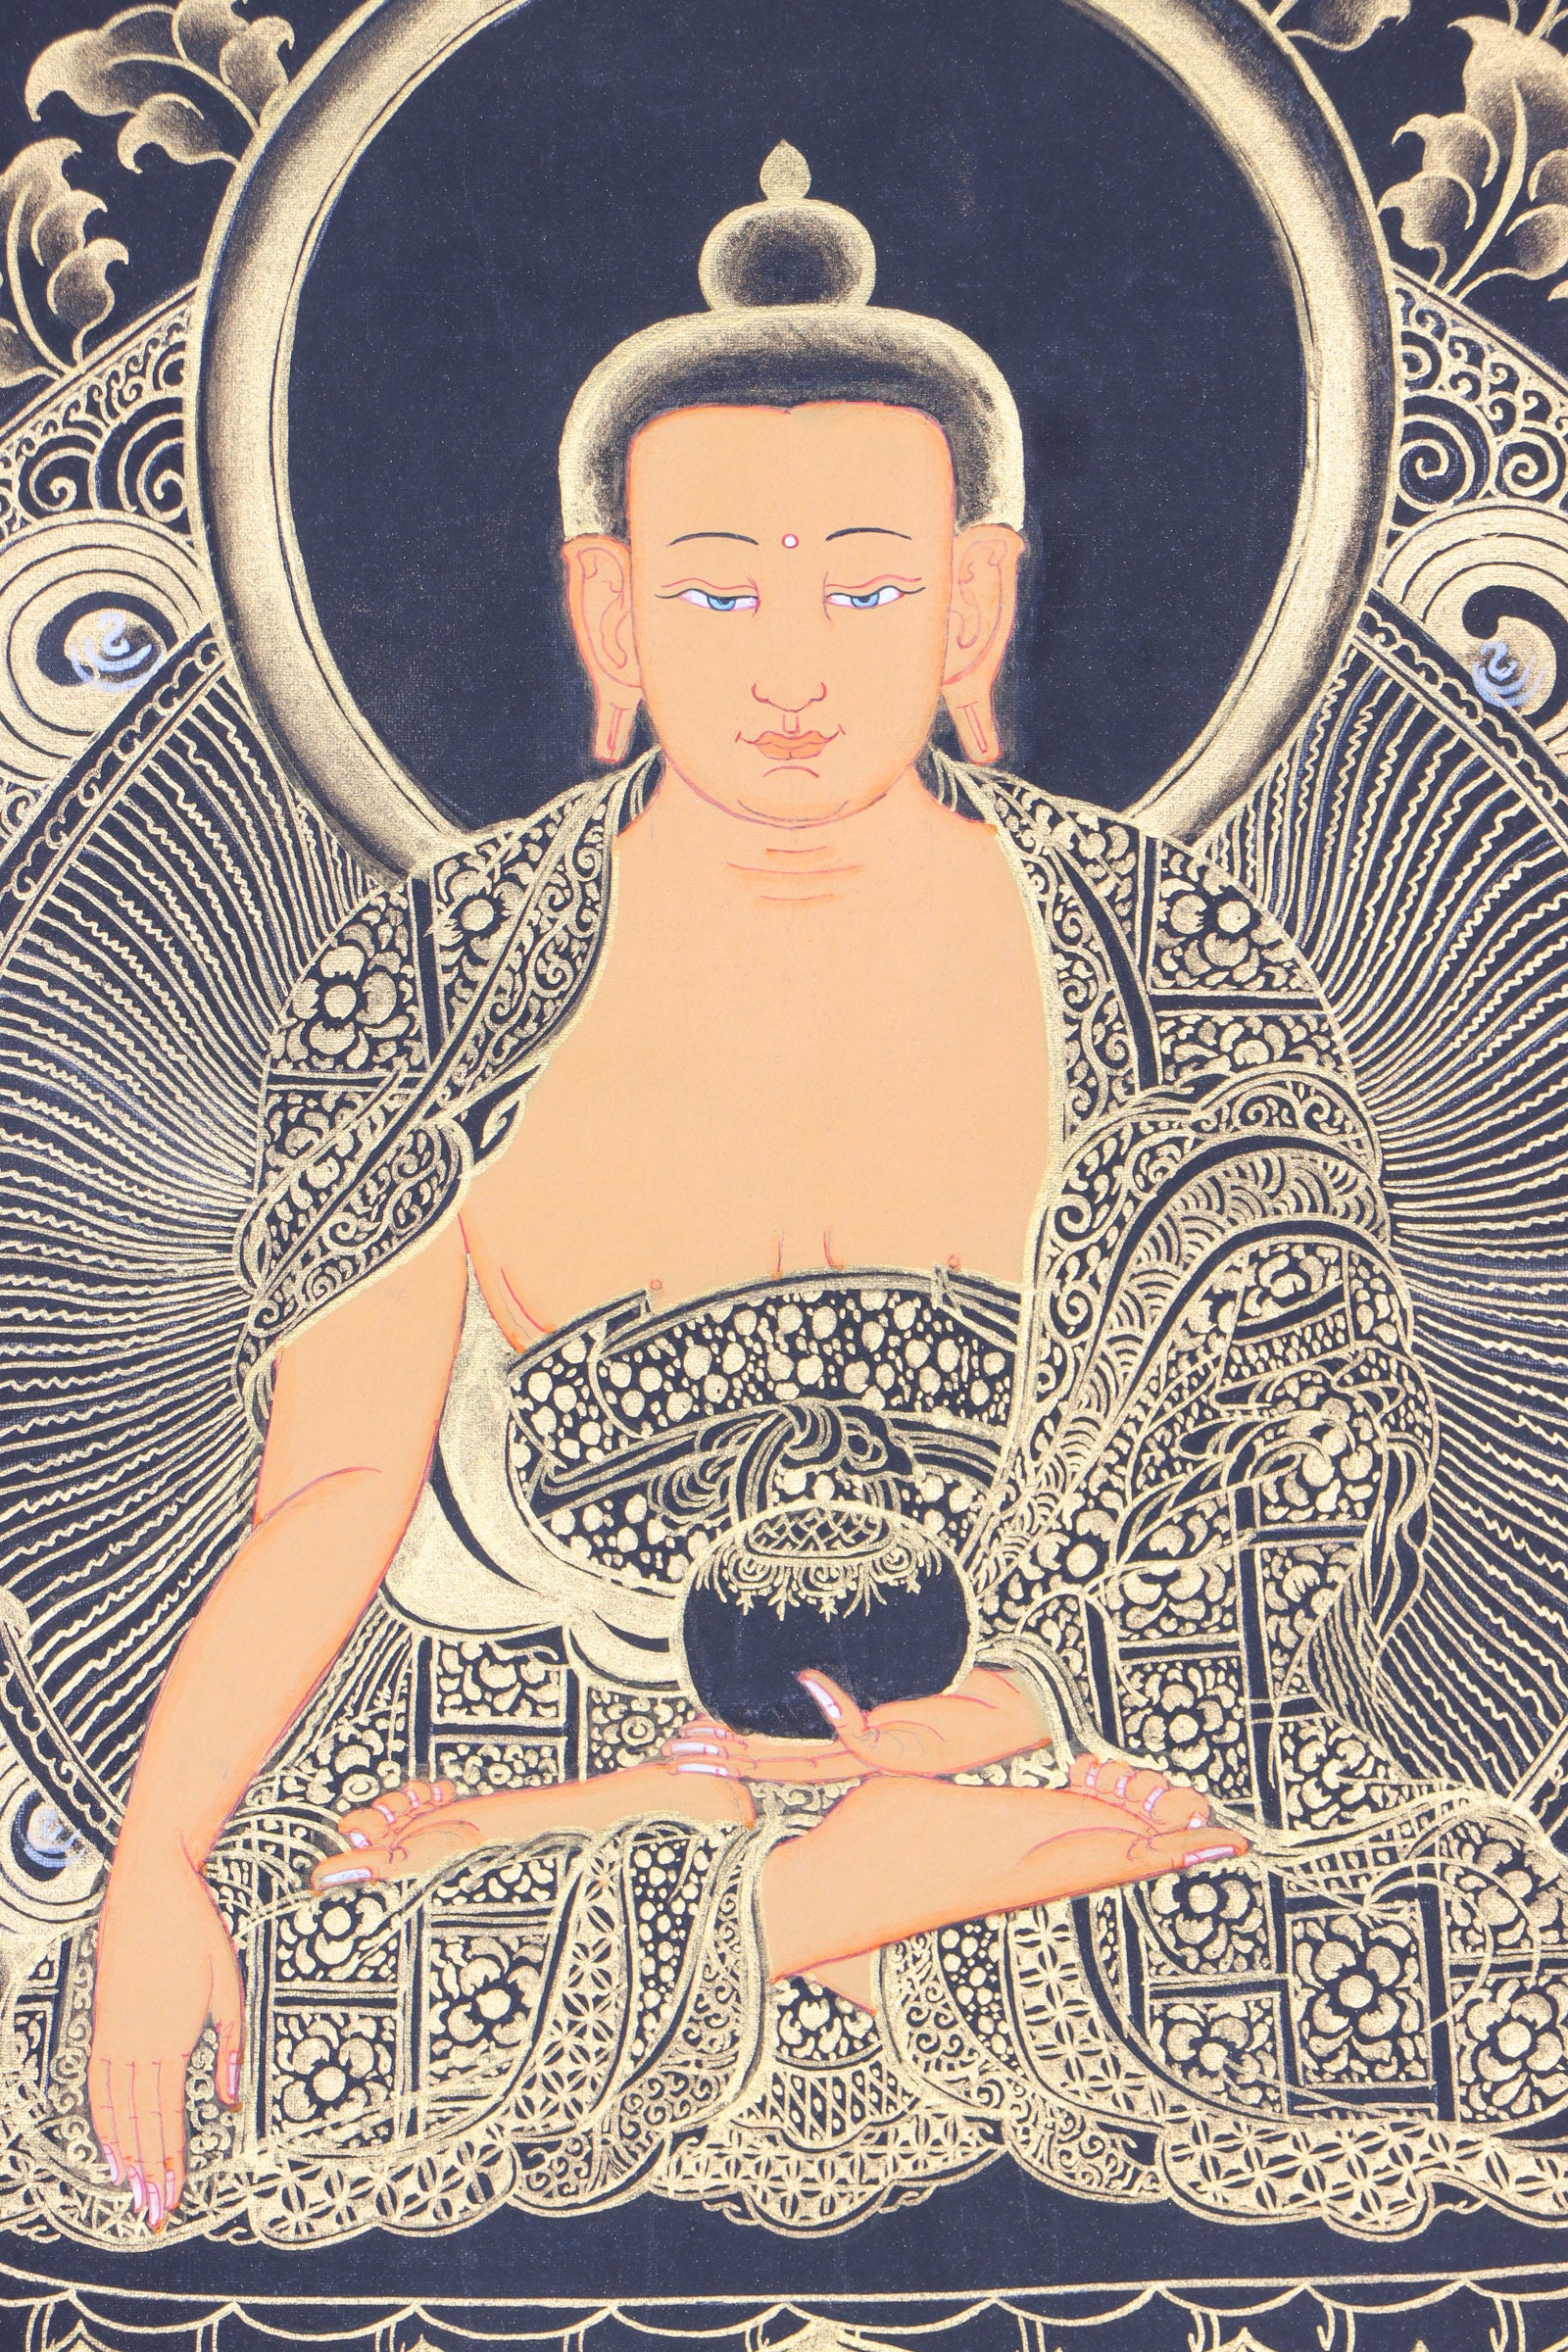 Shakyamuni Buddha Thangka Painting for peace and enlightenment.